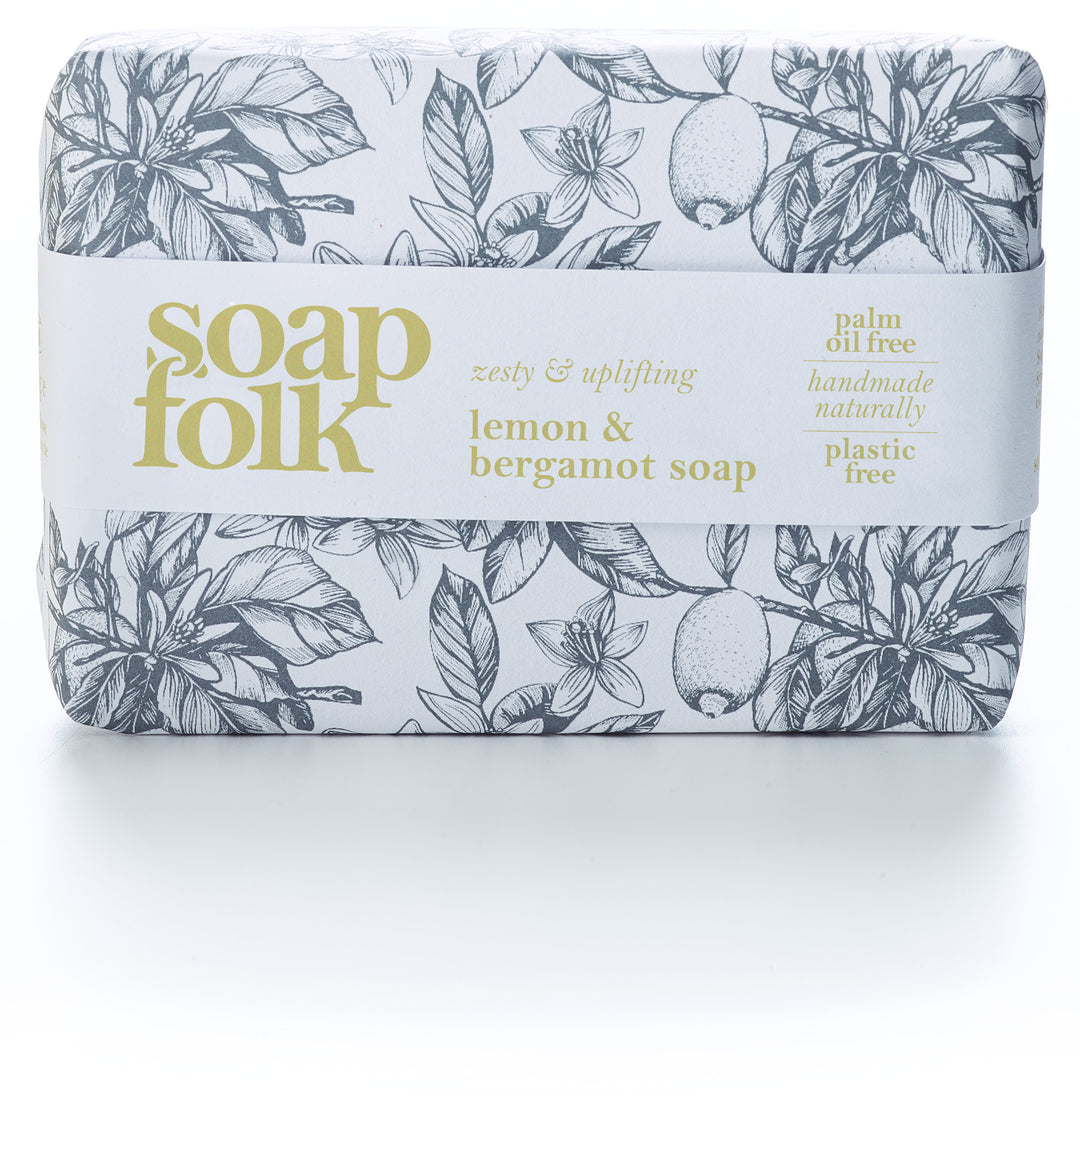 Soap Folk  Lemon & Bergamot Soap for sale at Source for the Goose 